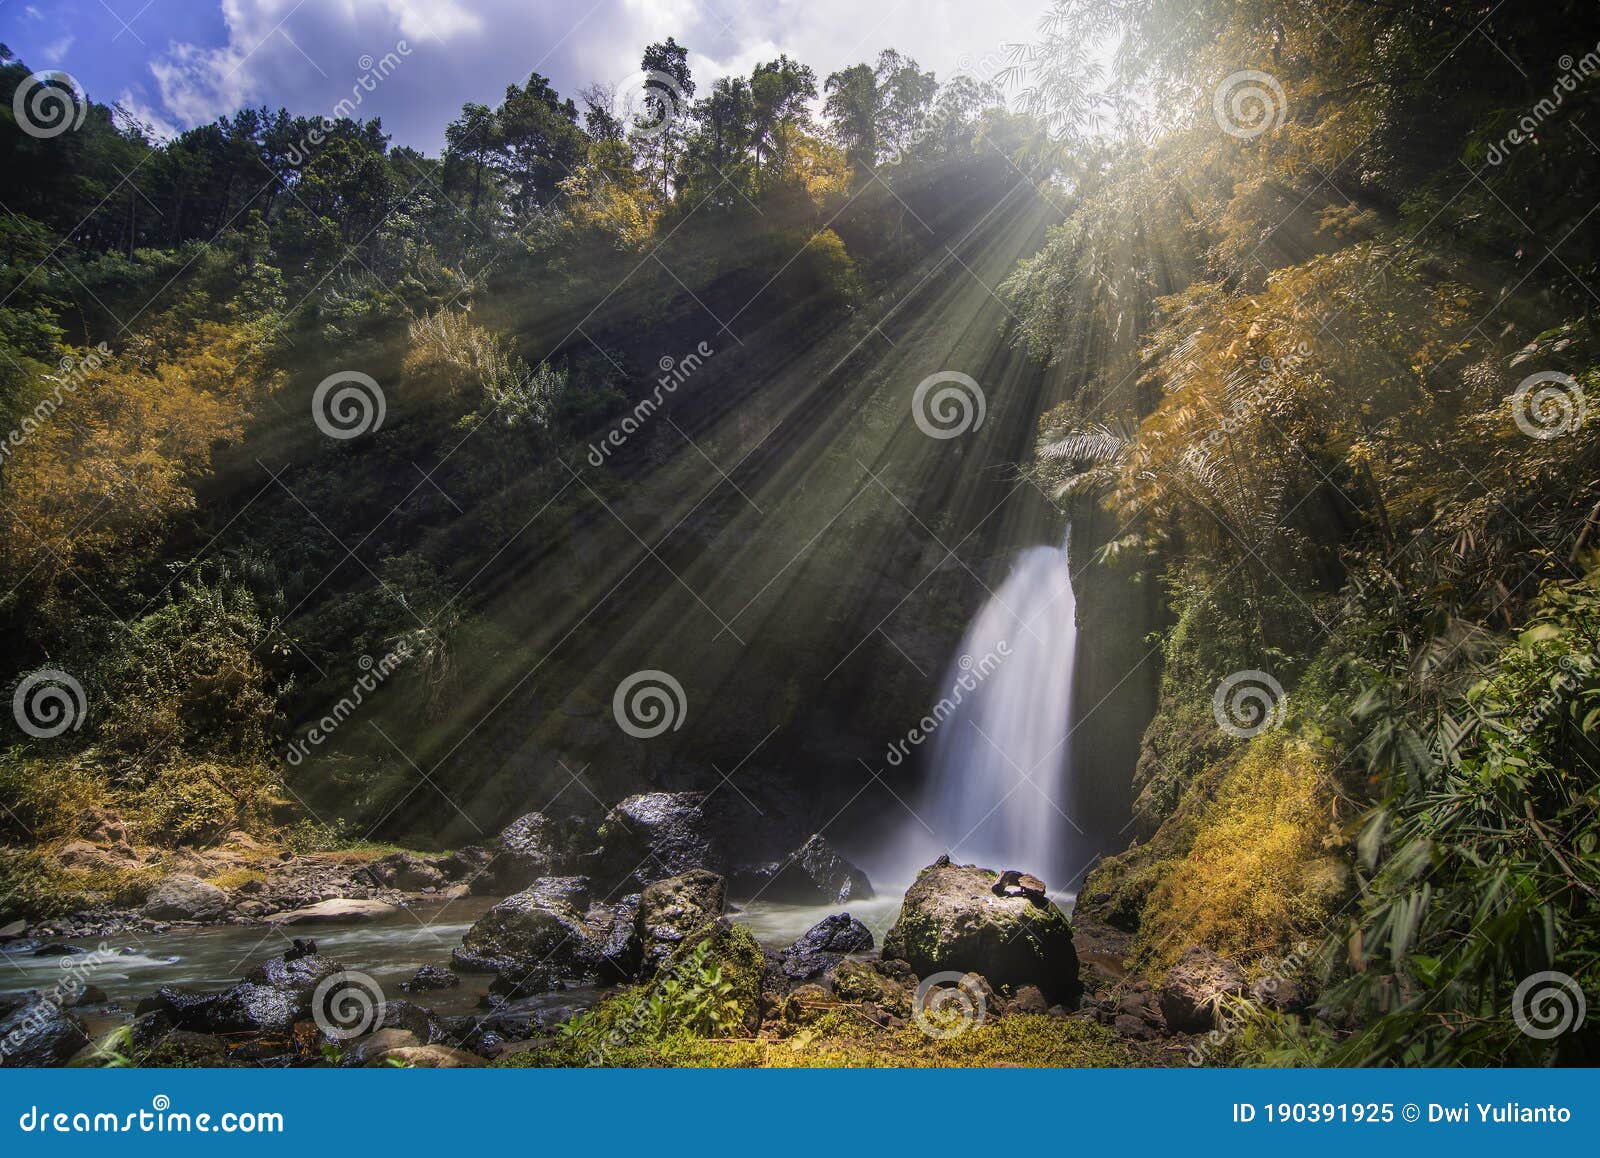 Waterfall in Tropical Garden Stock - Image of outdoor, green: 190391925